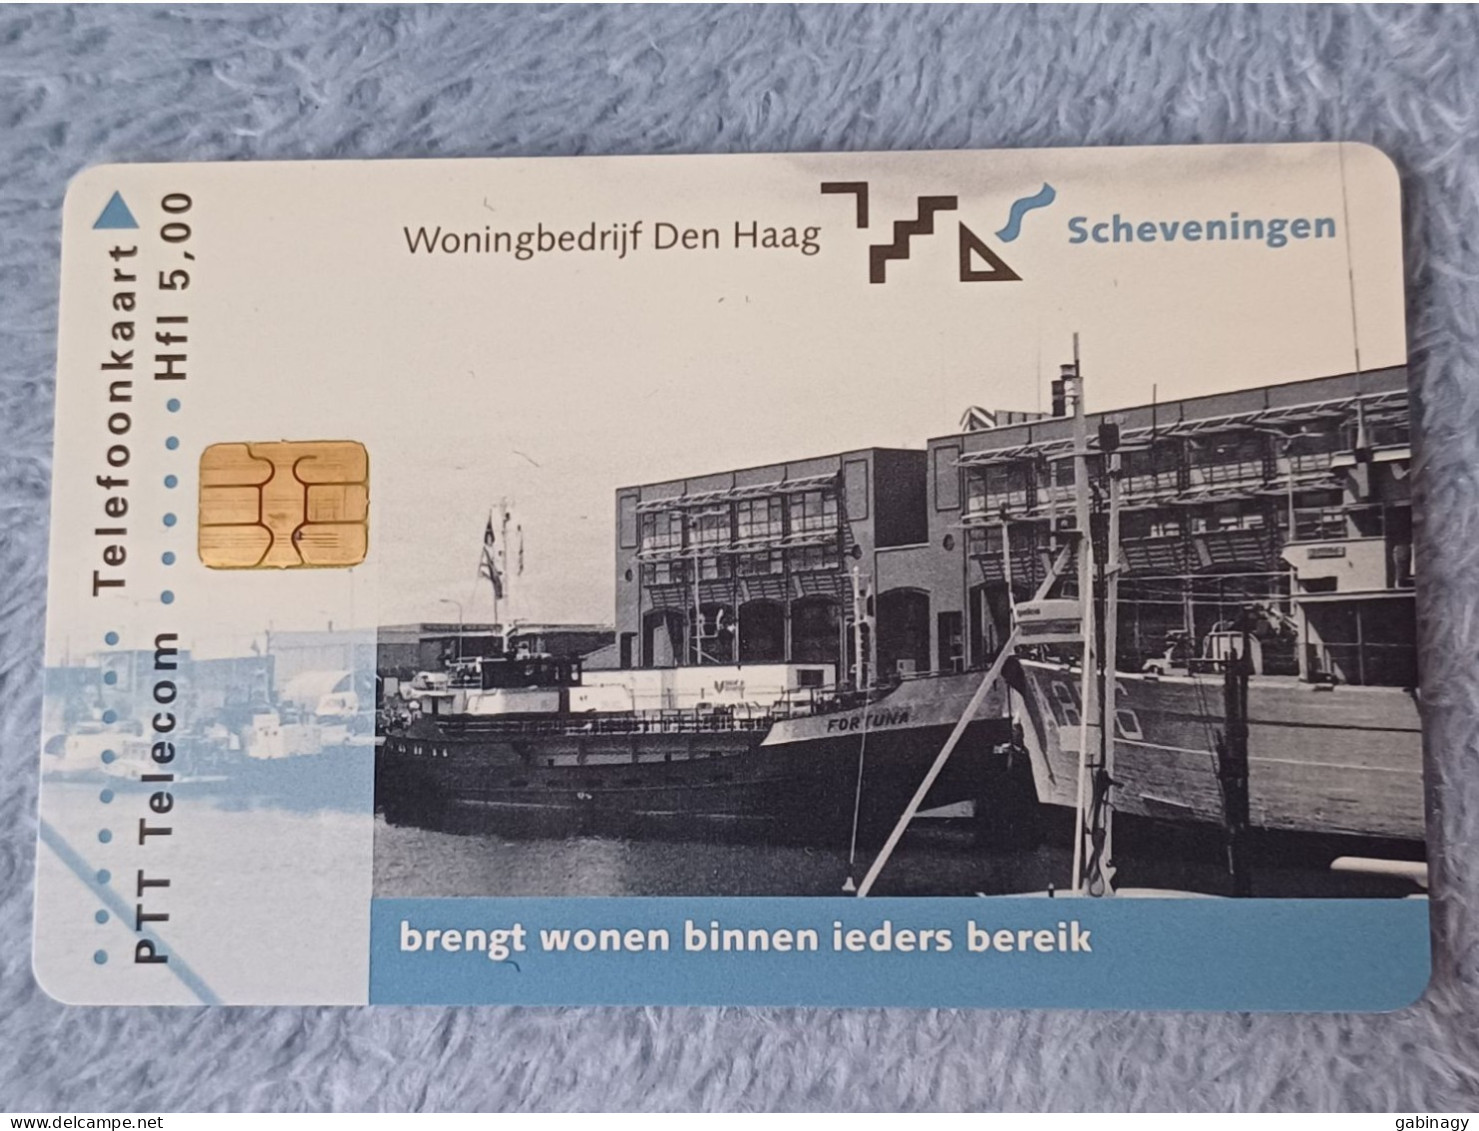 NETHERLANDS - CRD370 - Woningbedrijf Den Haag Scheveningen - 1.000EX. - Private